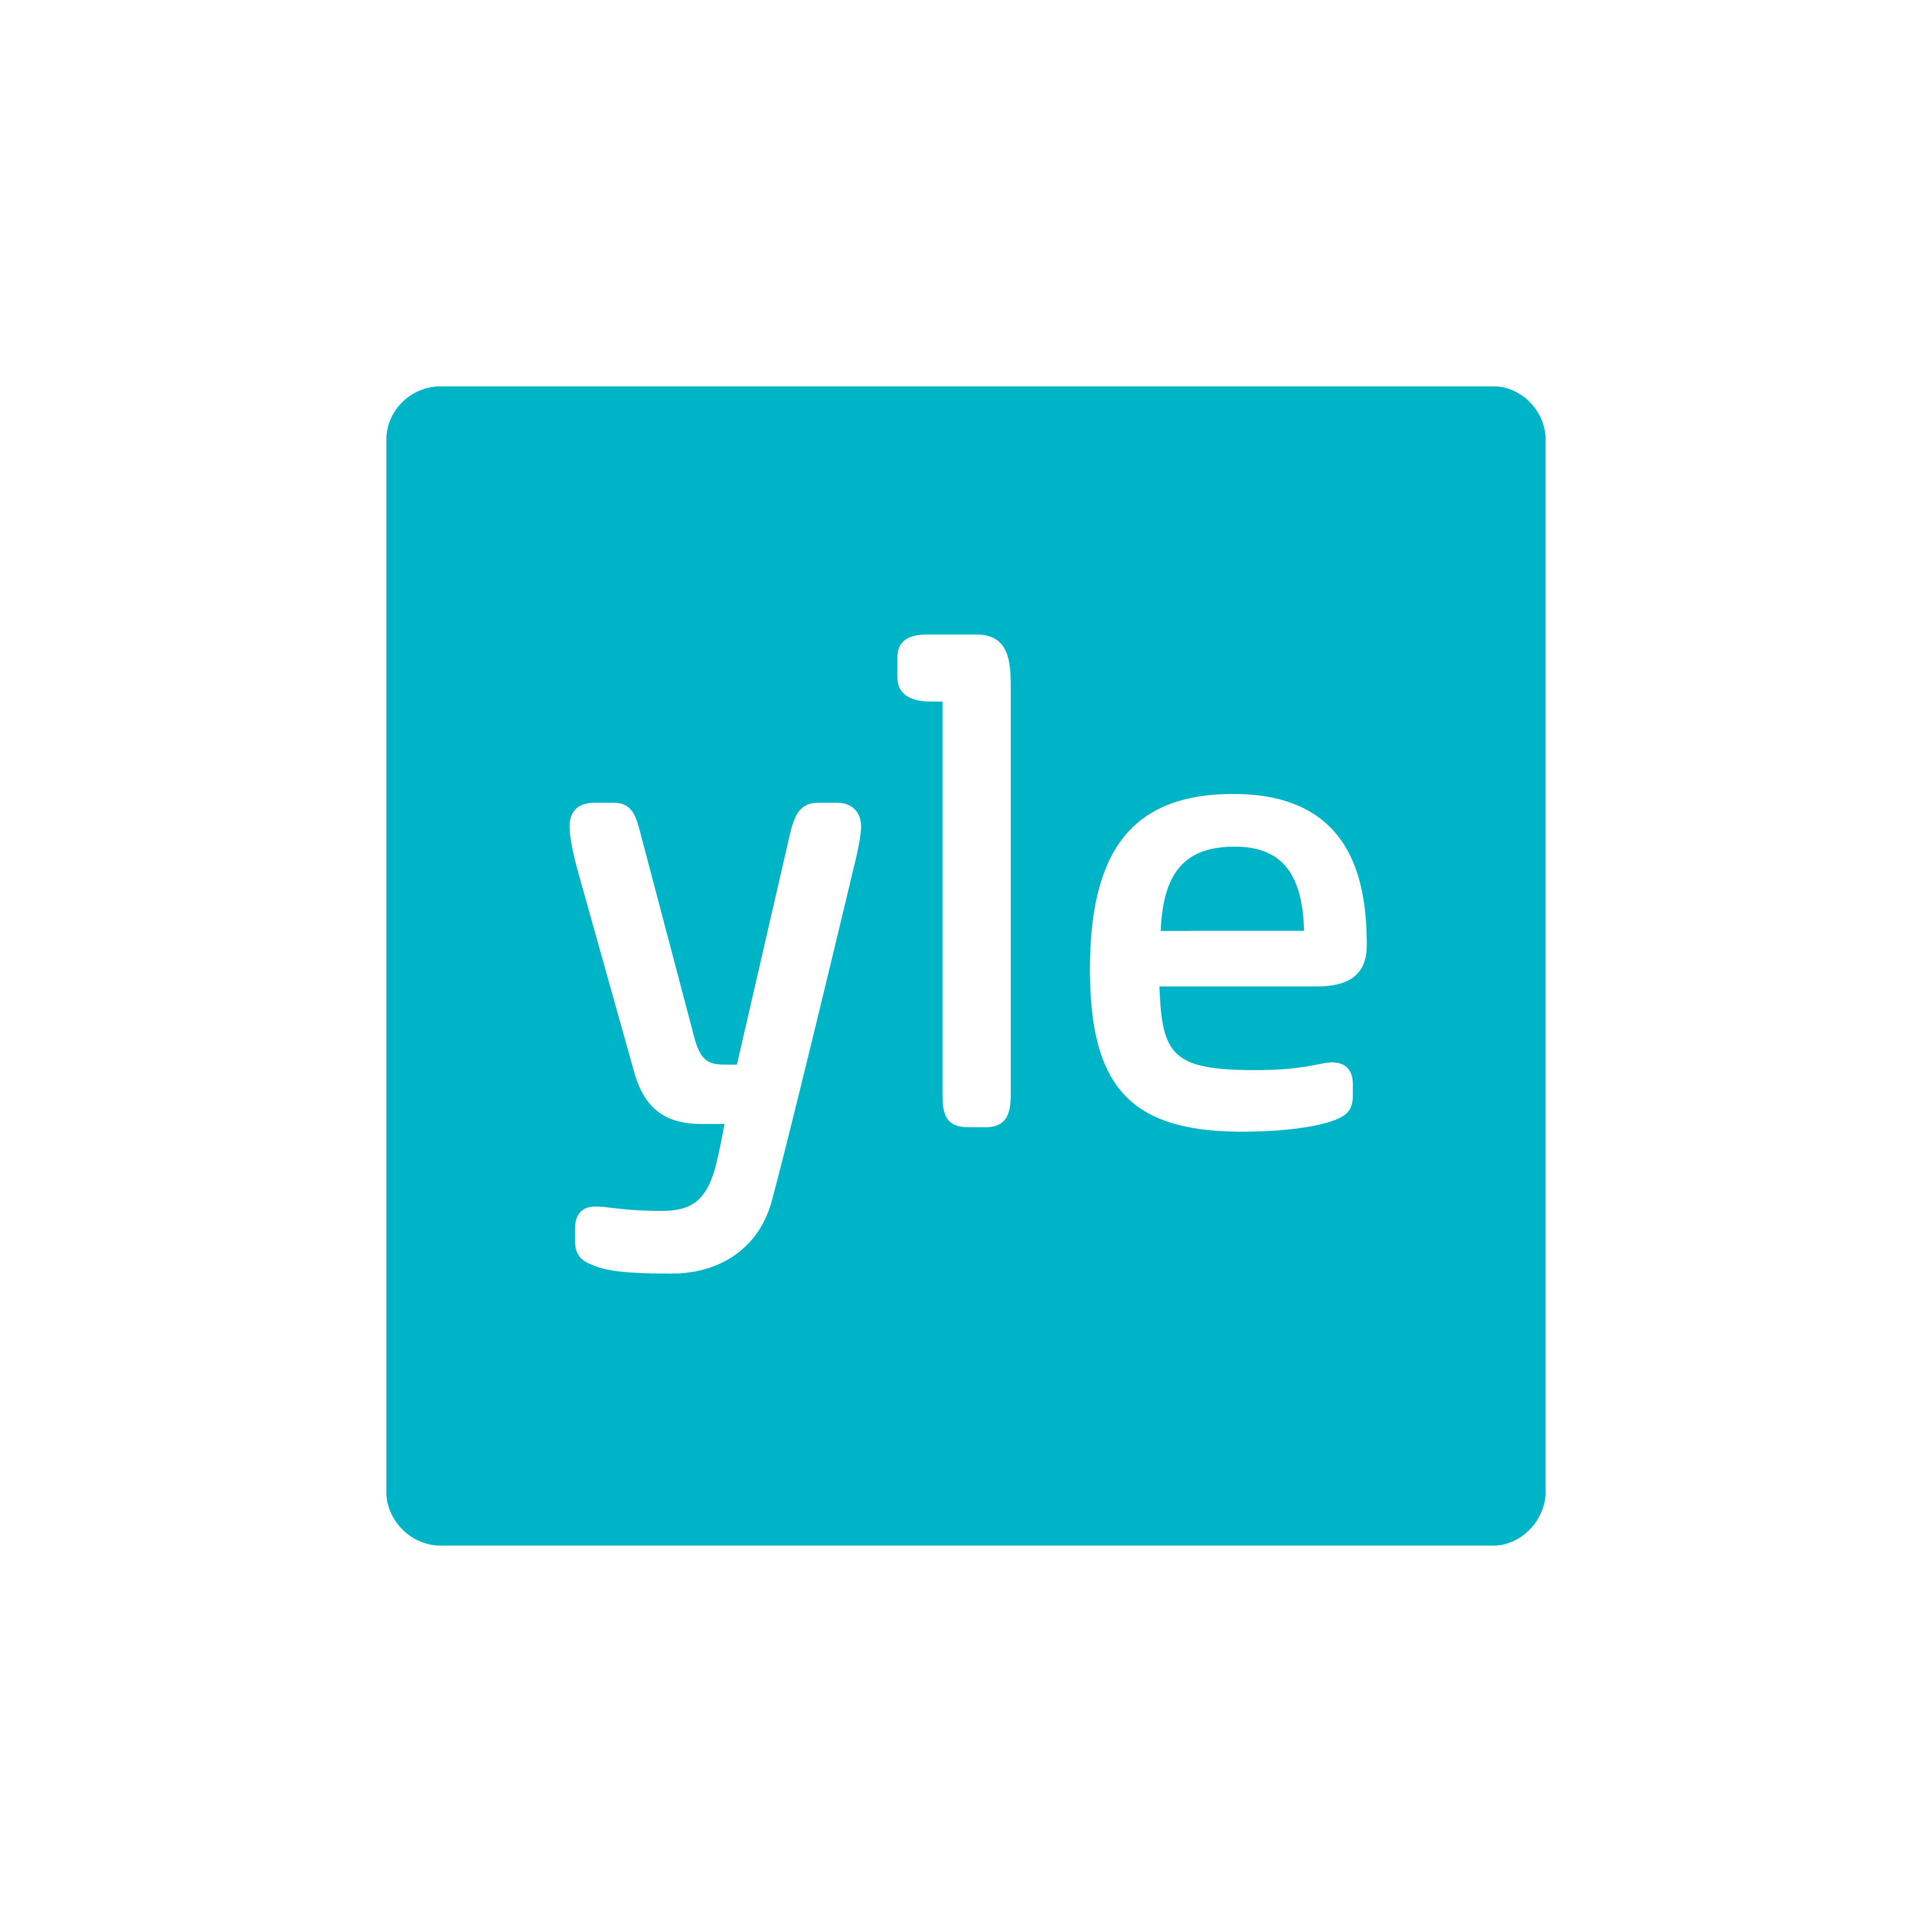 Yle logo